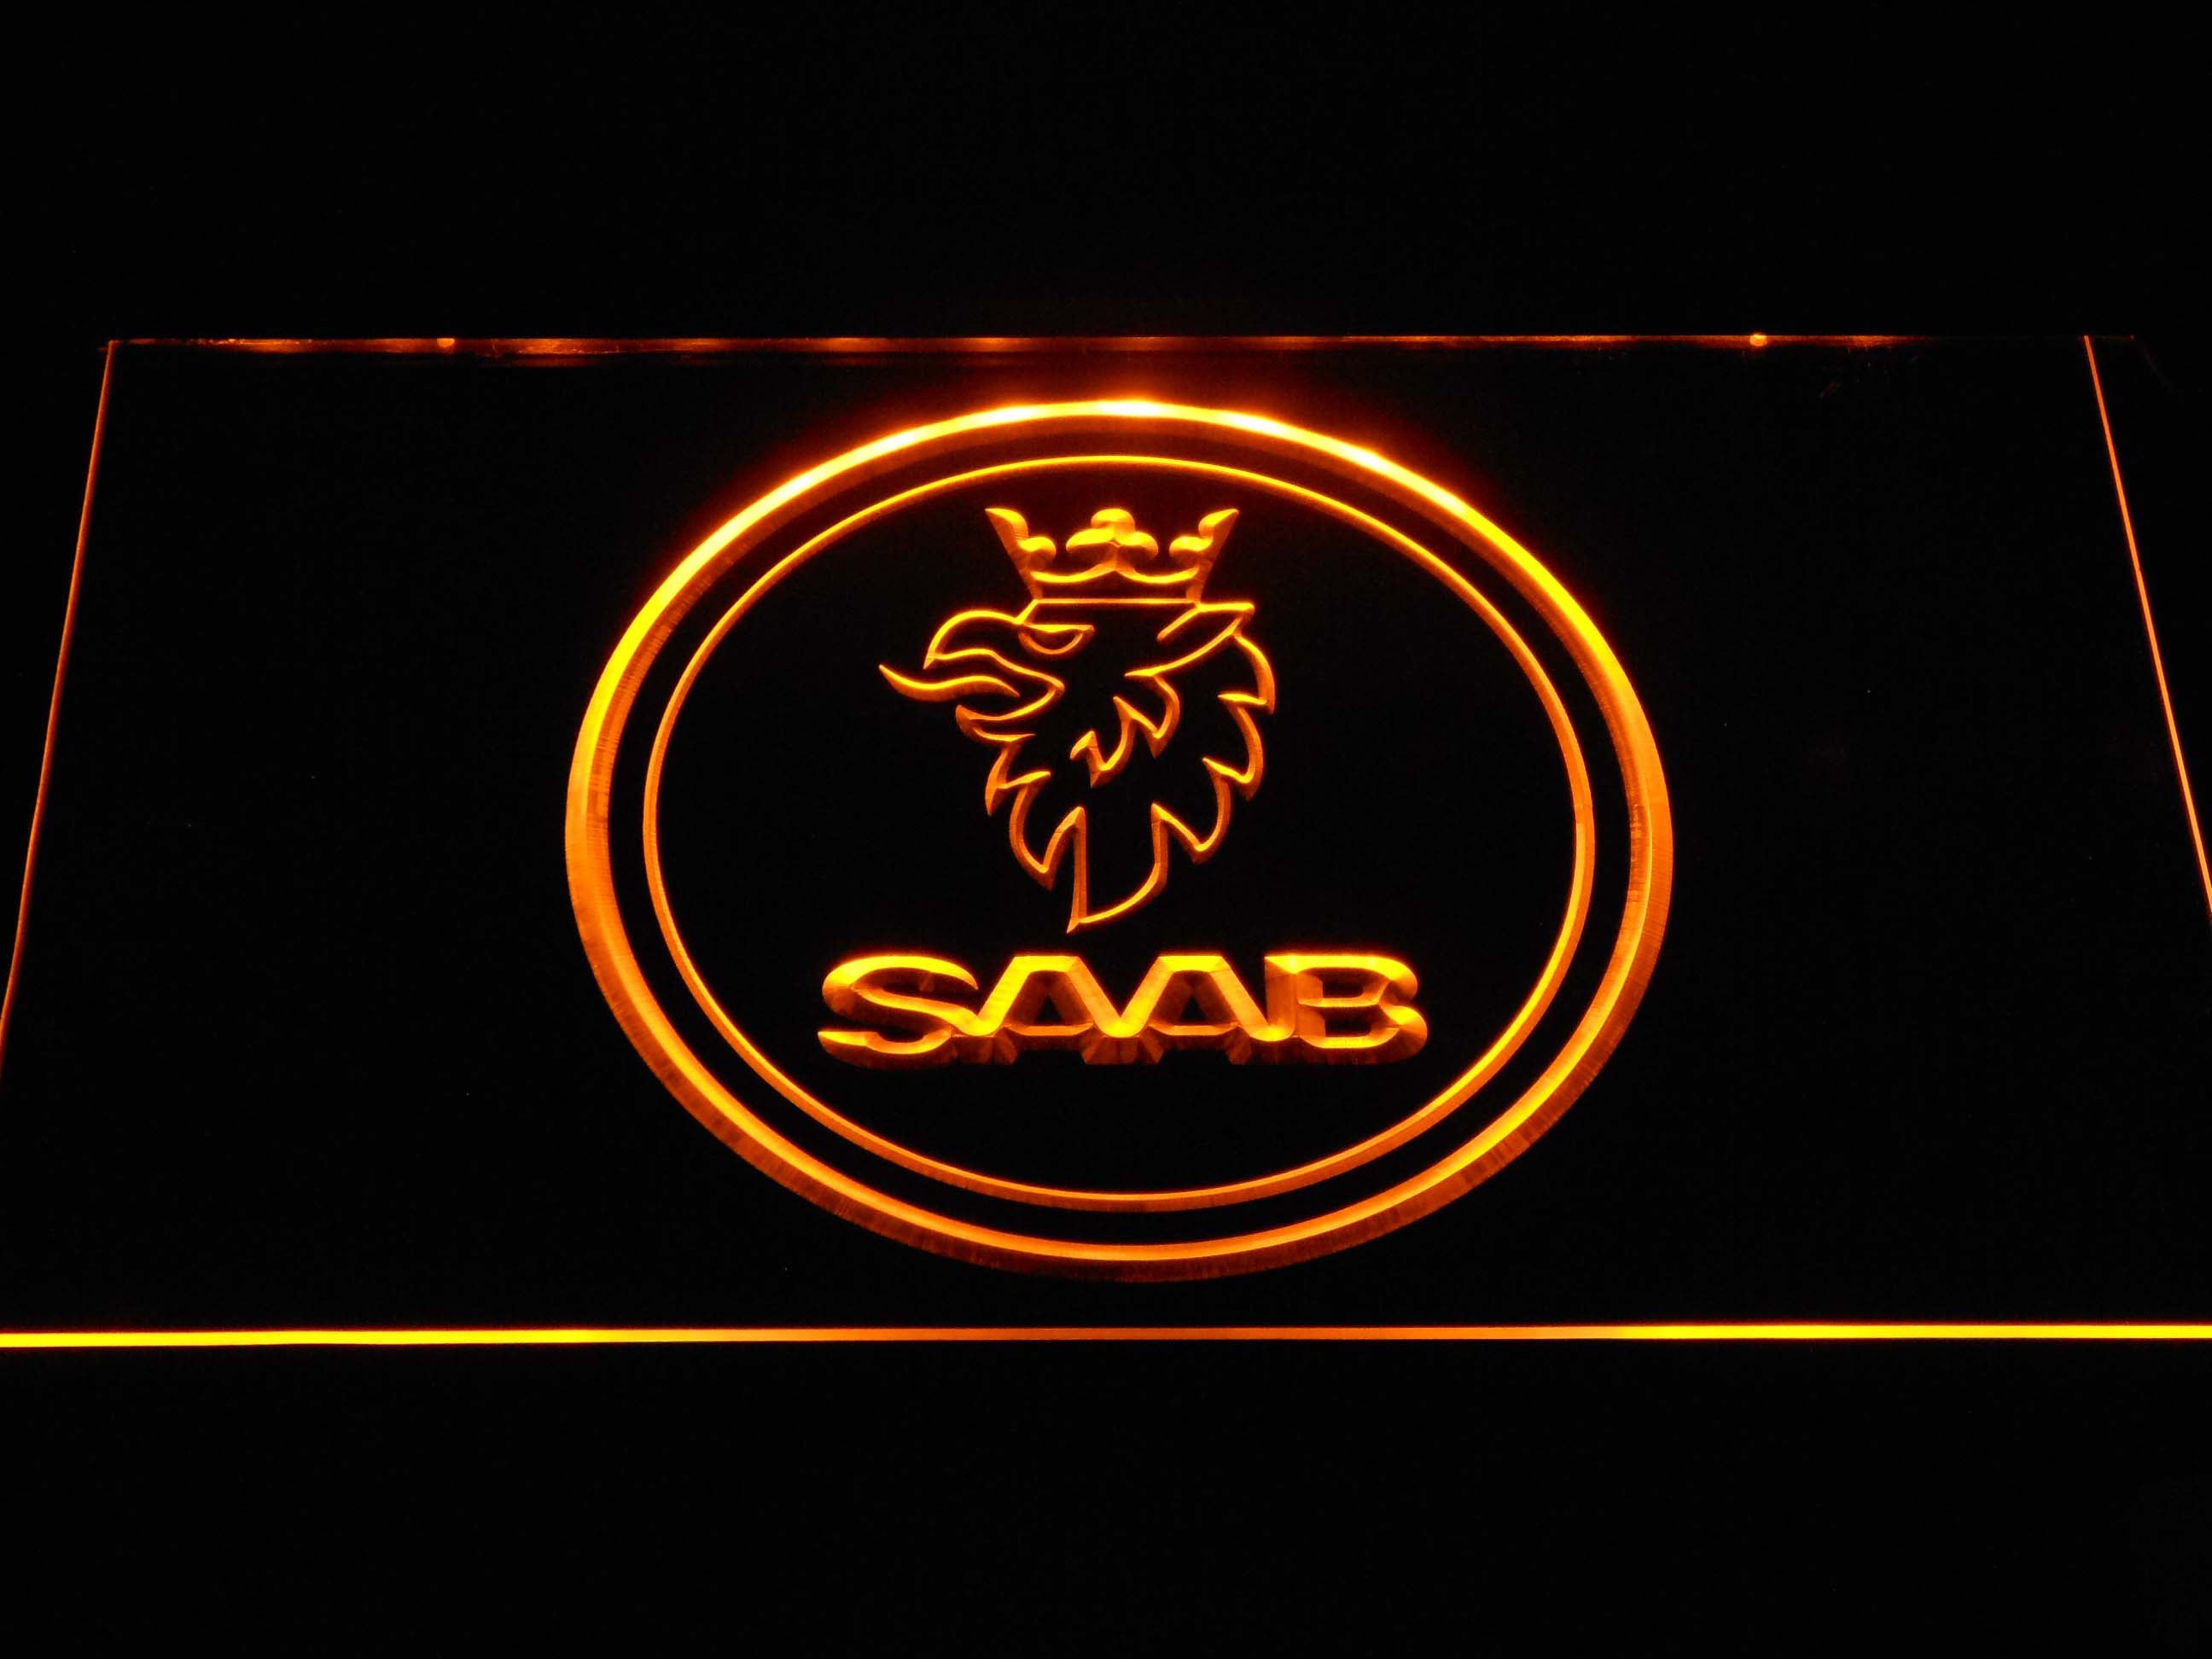 Saab Emblem Neon LED Light Sign